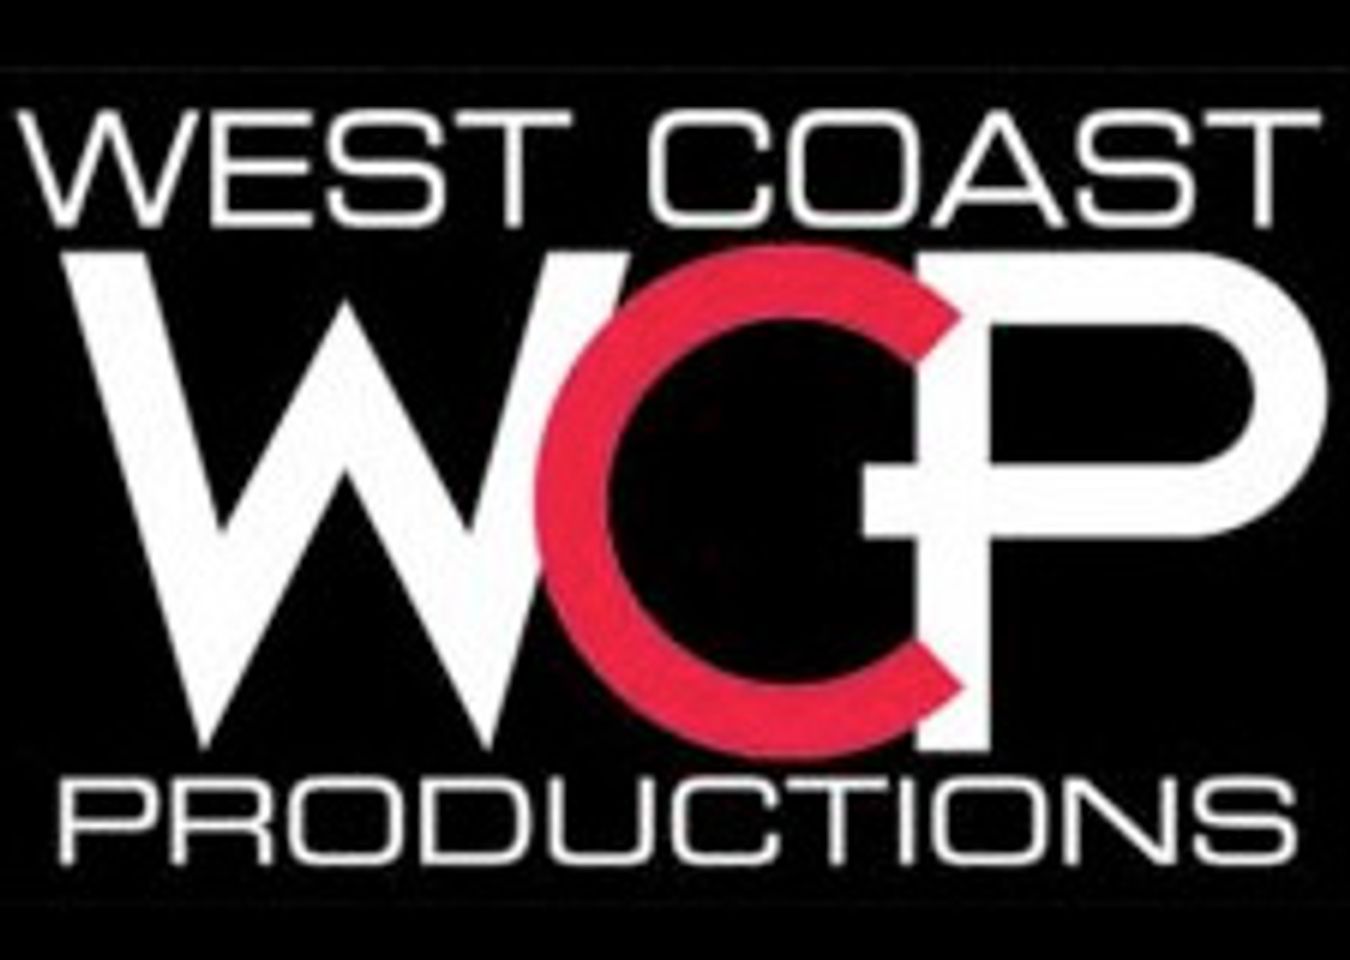 donna natalie recommends west coast productions xxx pic